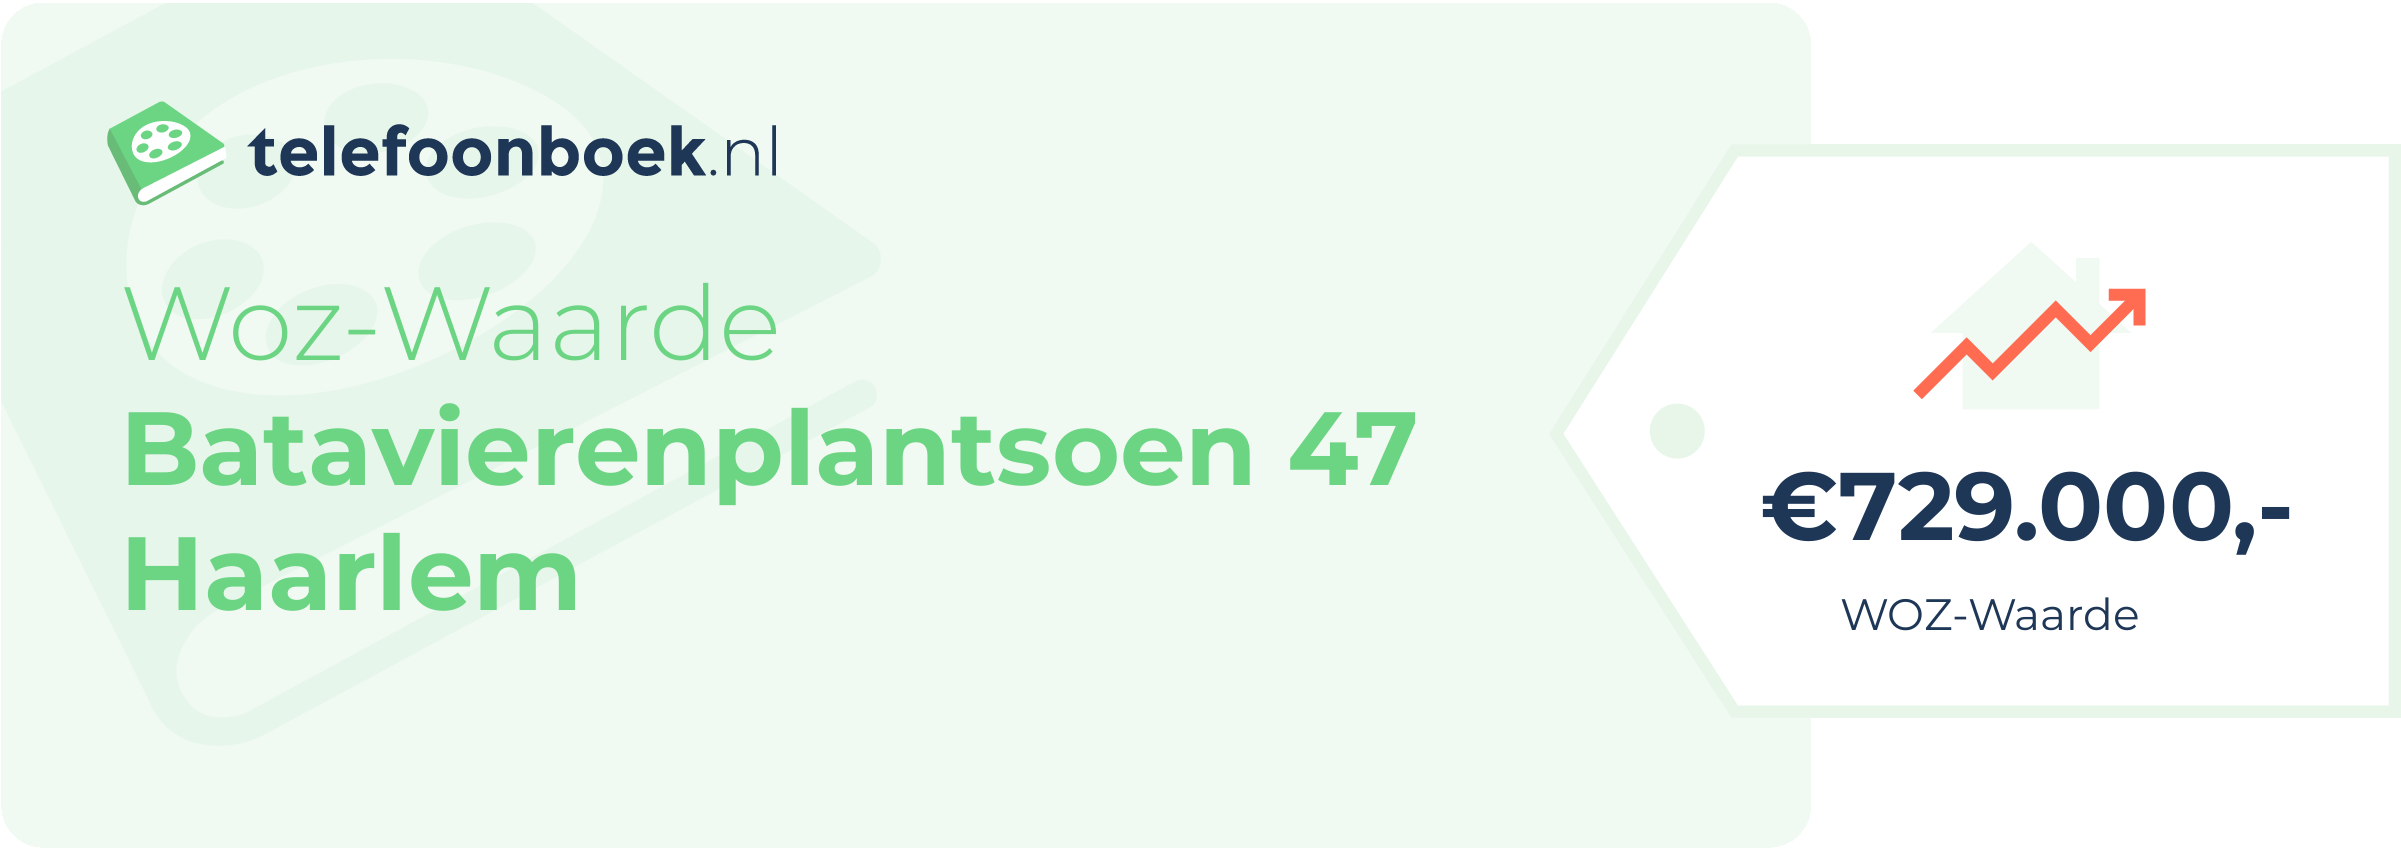 WOZ-waarde Batavierenplantsoen 47 Haarlem